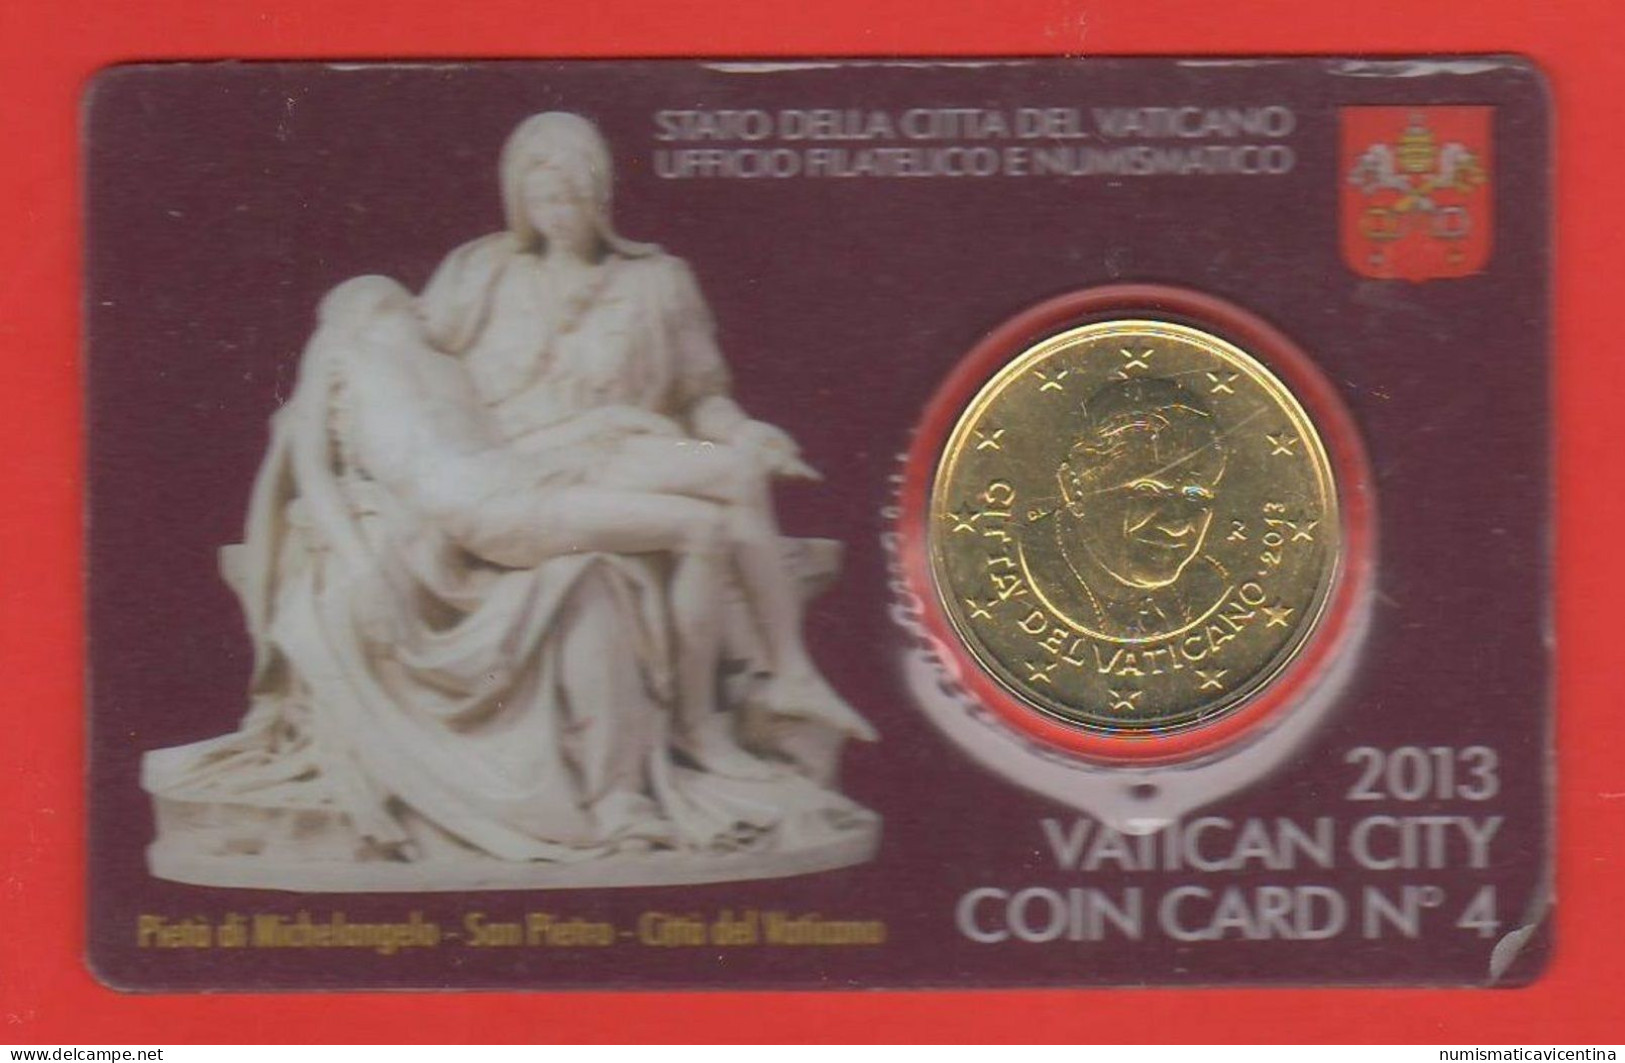 Vaticano 50 Centesimi 2013 Benedetto XVI° Coin Card N ° 4 Mint Roma 0,50 € Vatican City - Vatikan